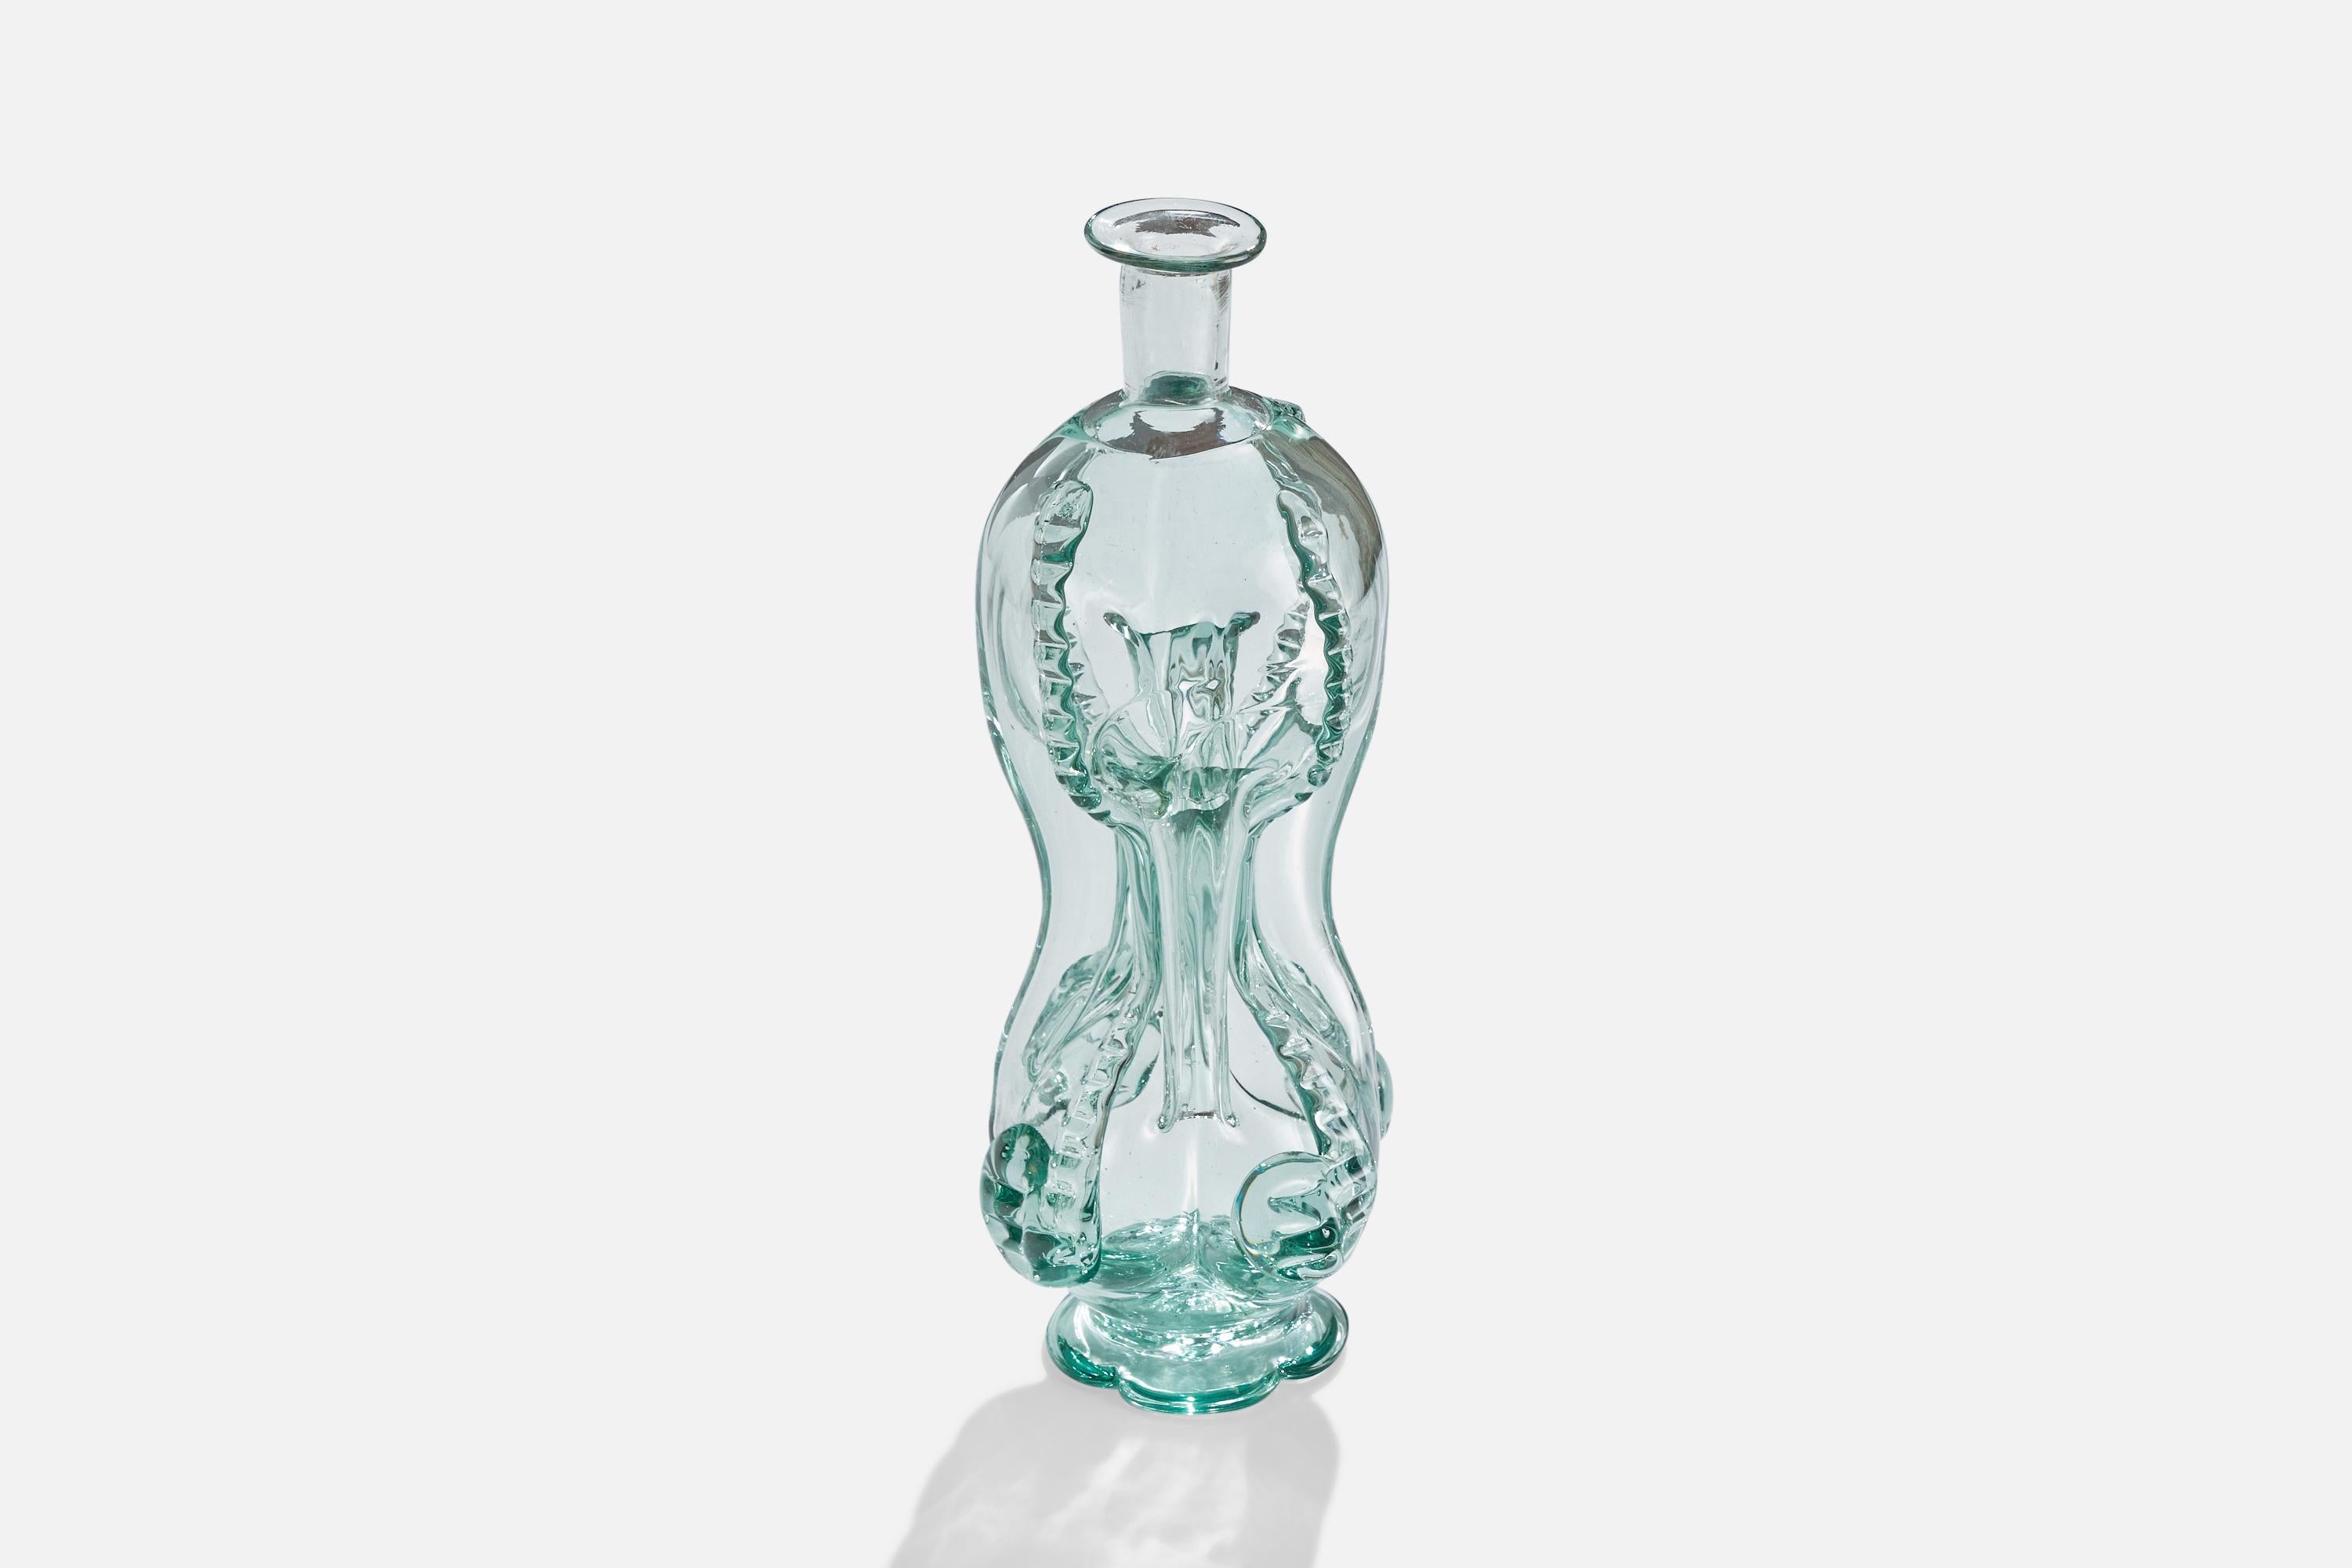 Scandinavian Modern Ture Berglund, Bottle, Glass, Sweden, 1940s For Sale